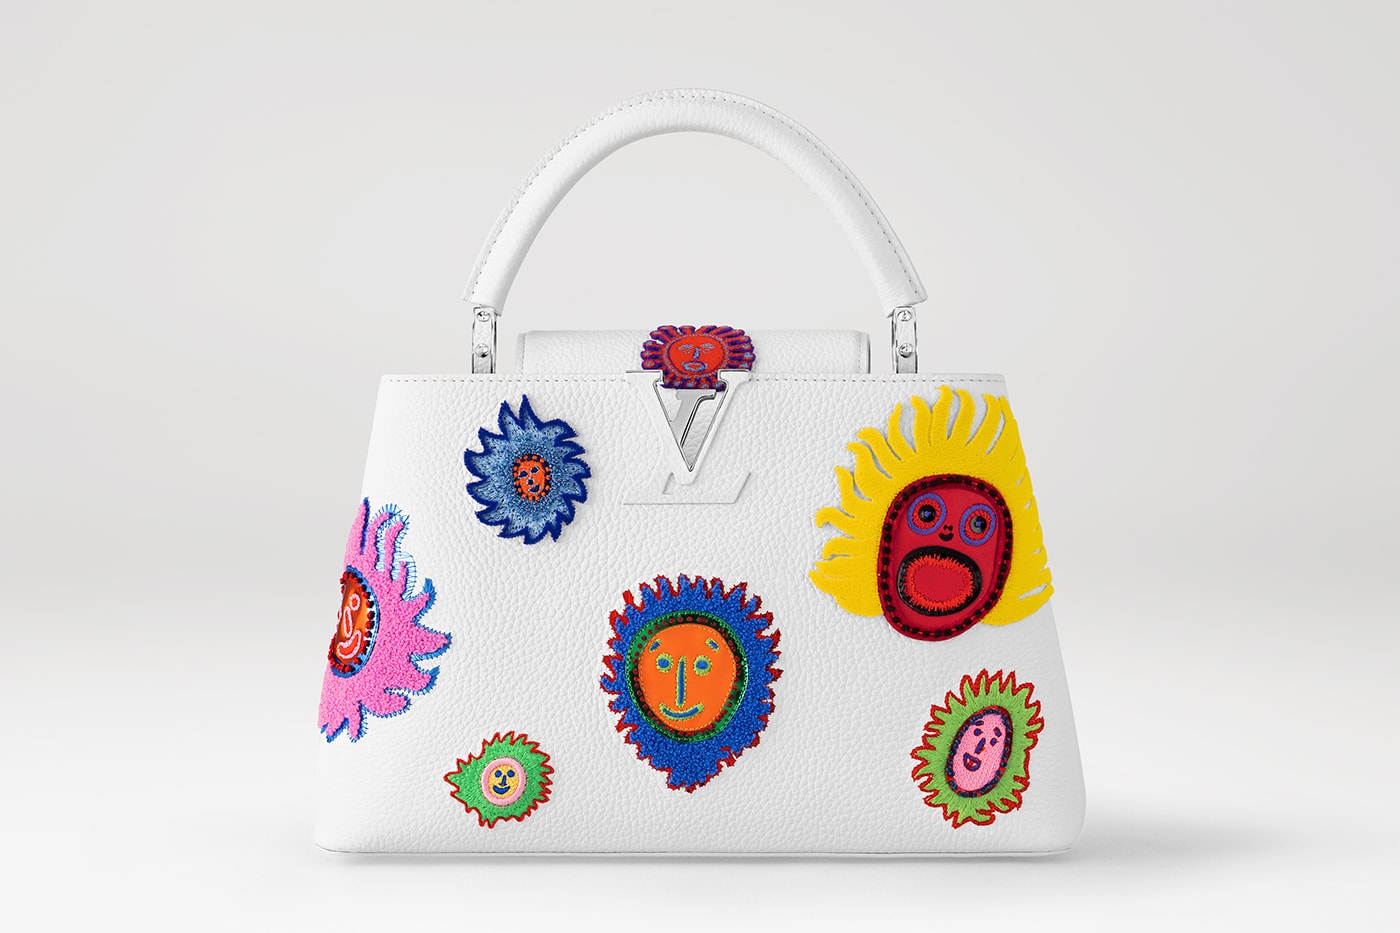 Inside Louis Vuitton's Most Popular Handbag Collaborations - The Study